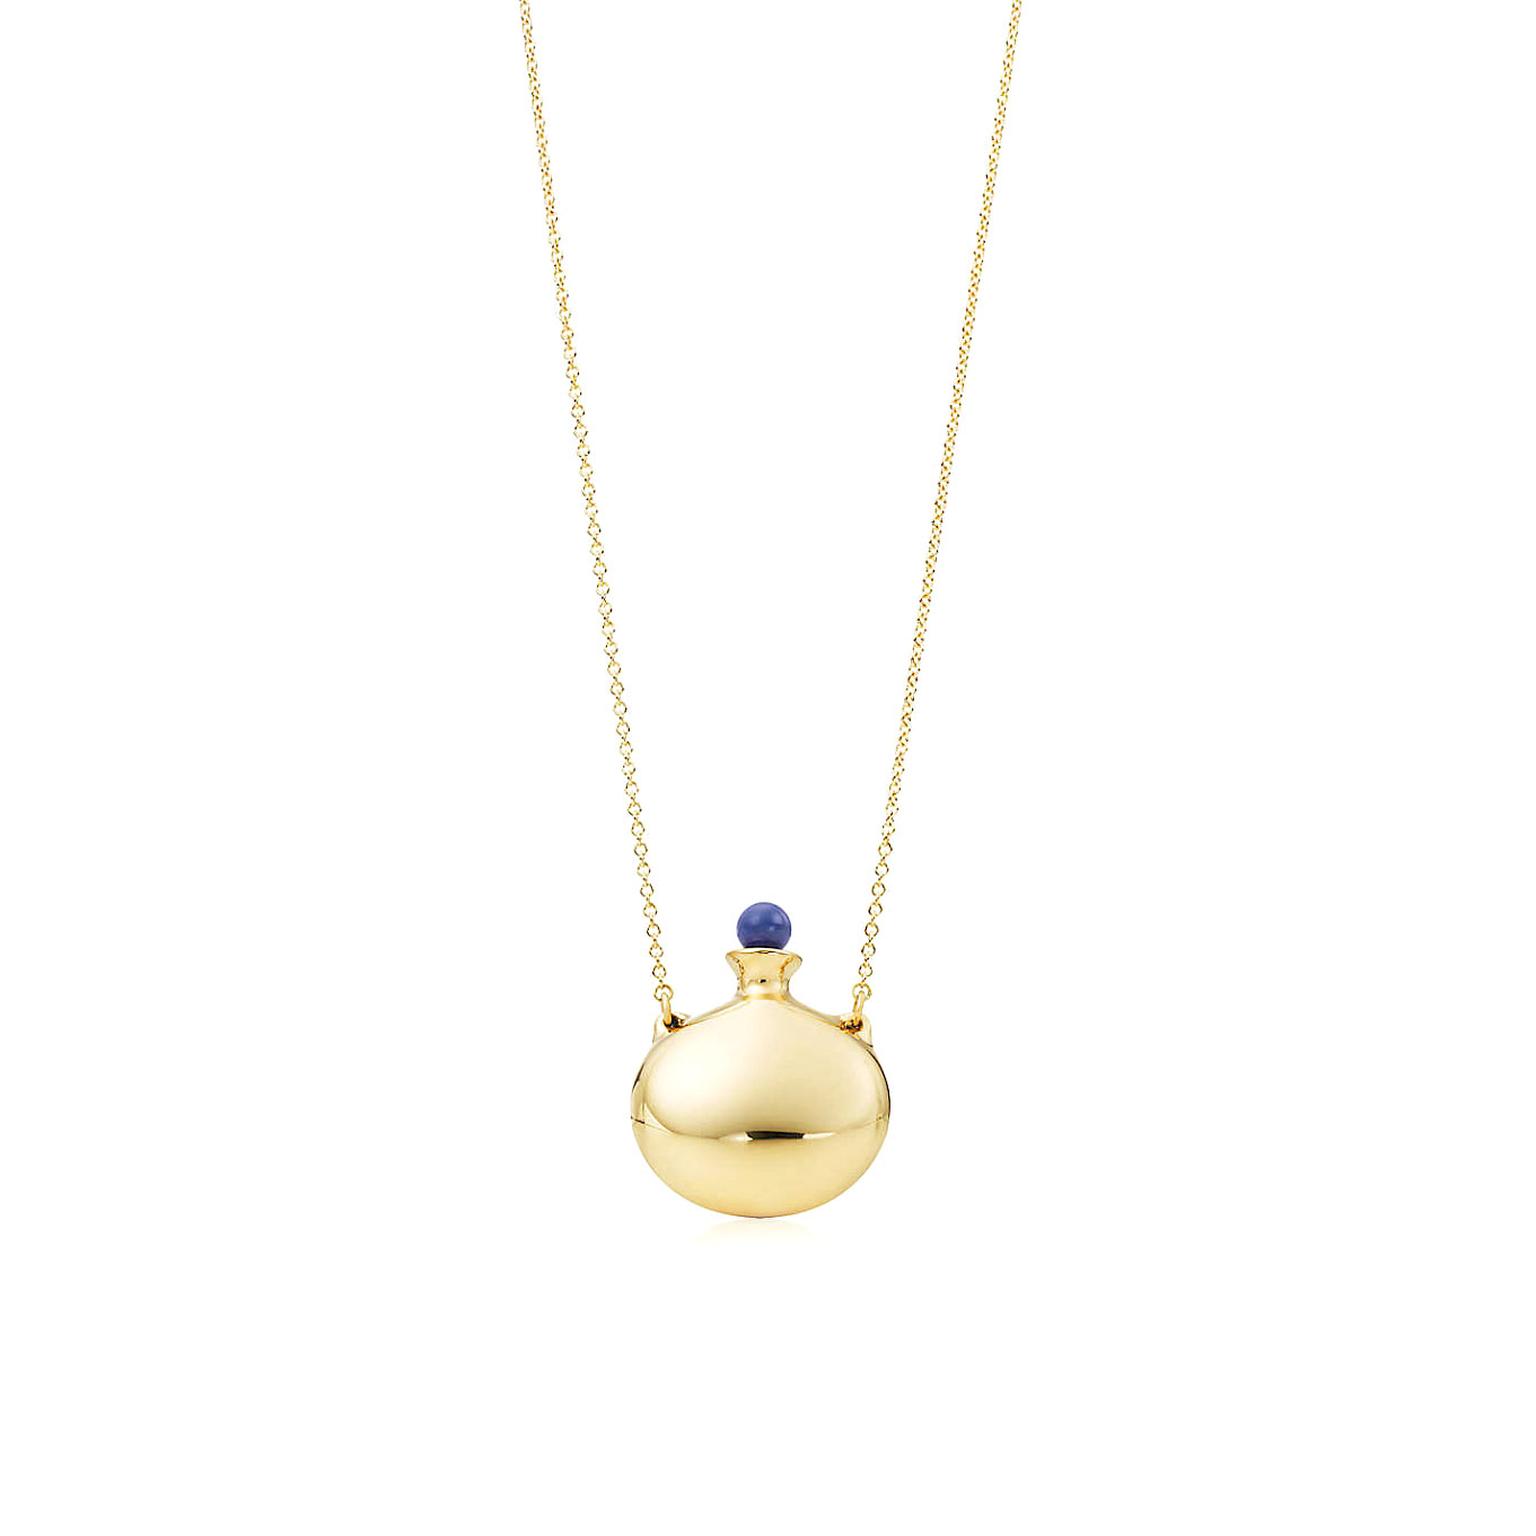 Elsa Peretti yellow gold Bottle pendant with lapis lazuli stopper